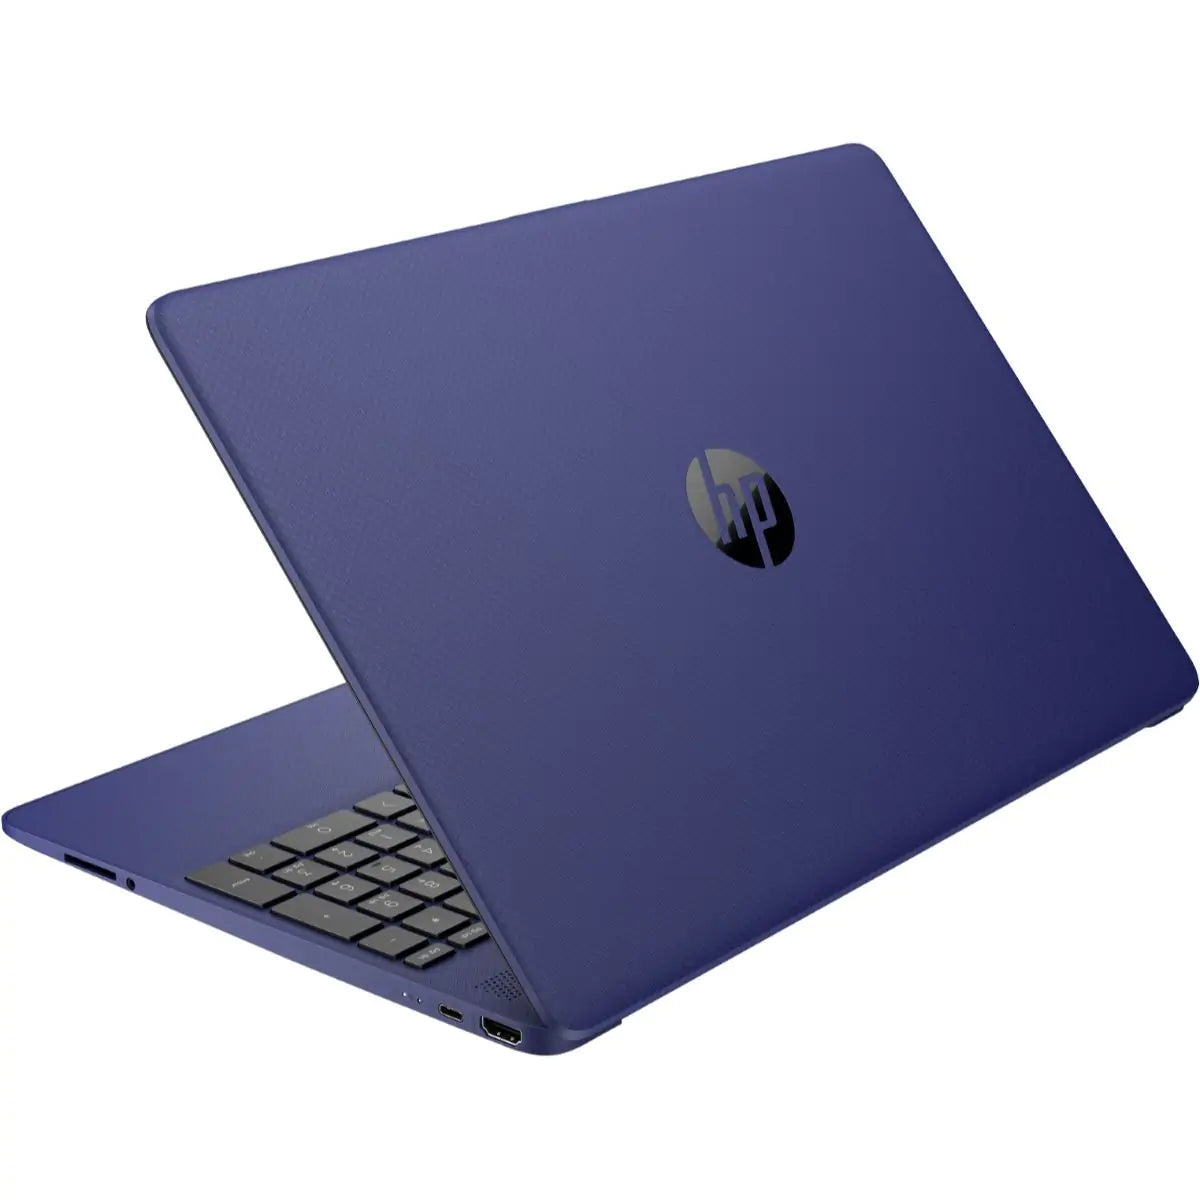 HP 15S-EQ1079NA 15.6" Laptop AMD Athlon 3020e 128GB 4GB RAM - Blue - Pristine